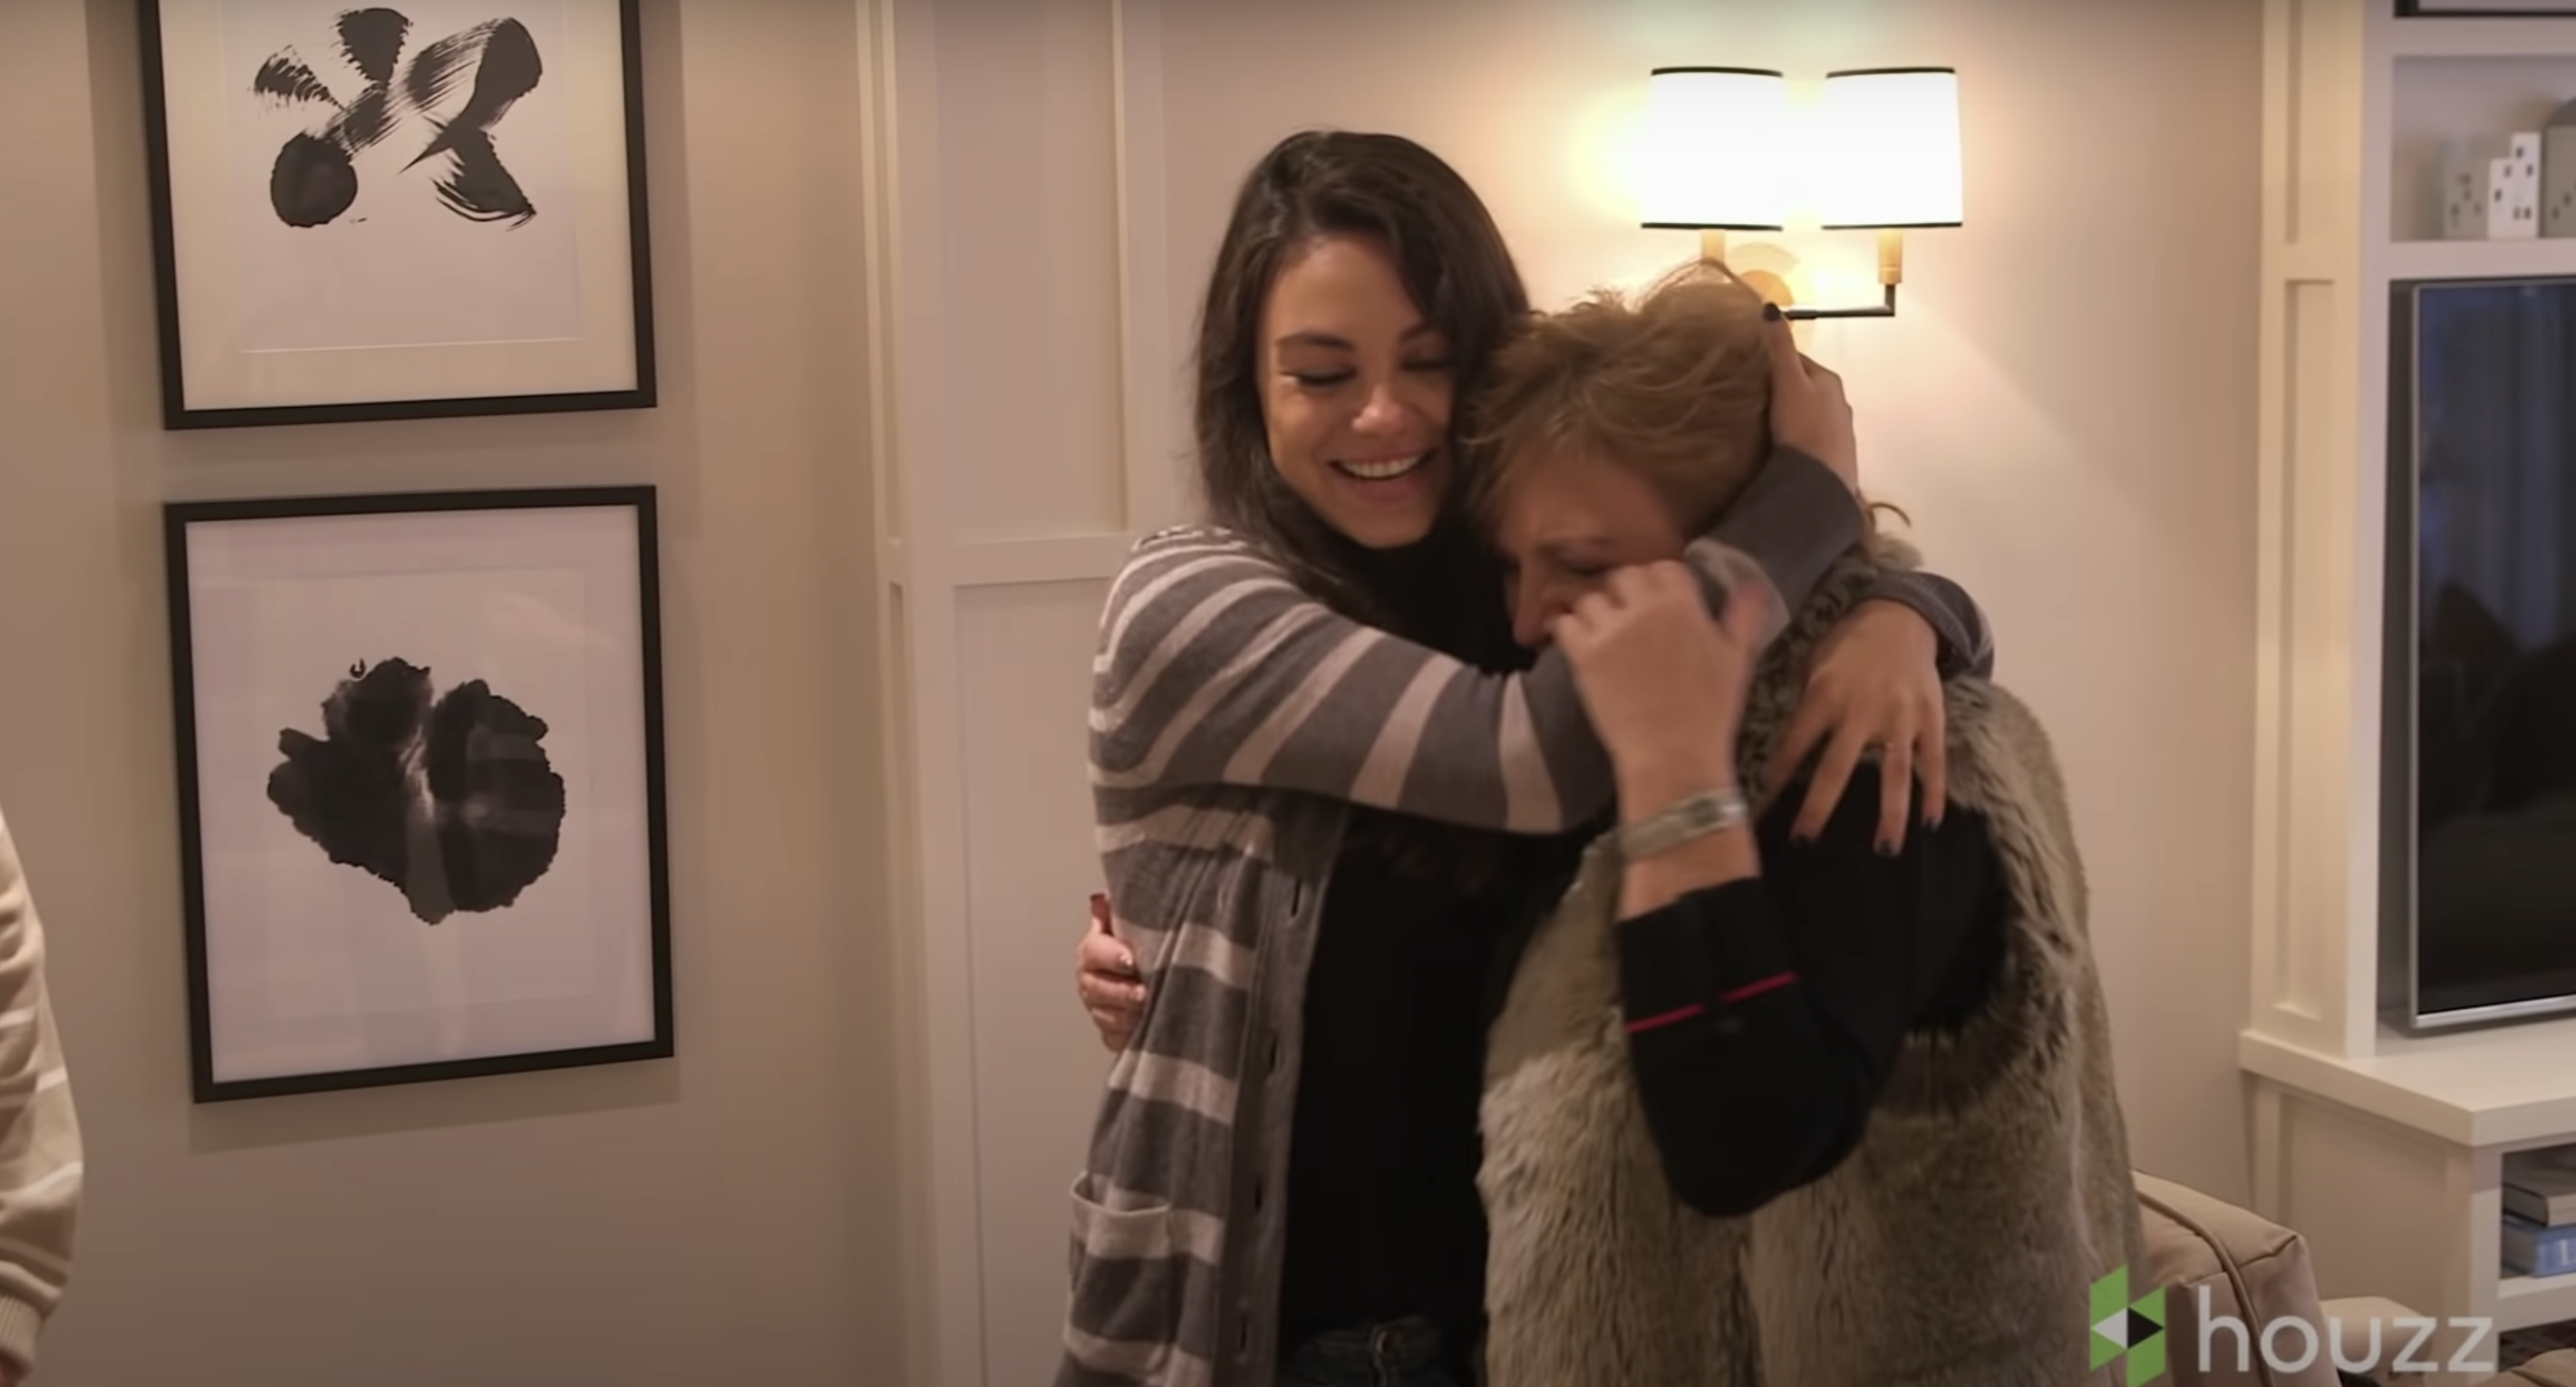 Mila Kunis hugs her mom, Elvira Kunis | Source: Youtube.com/HouzzTV